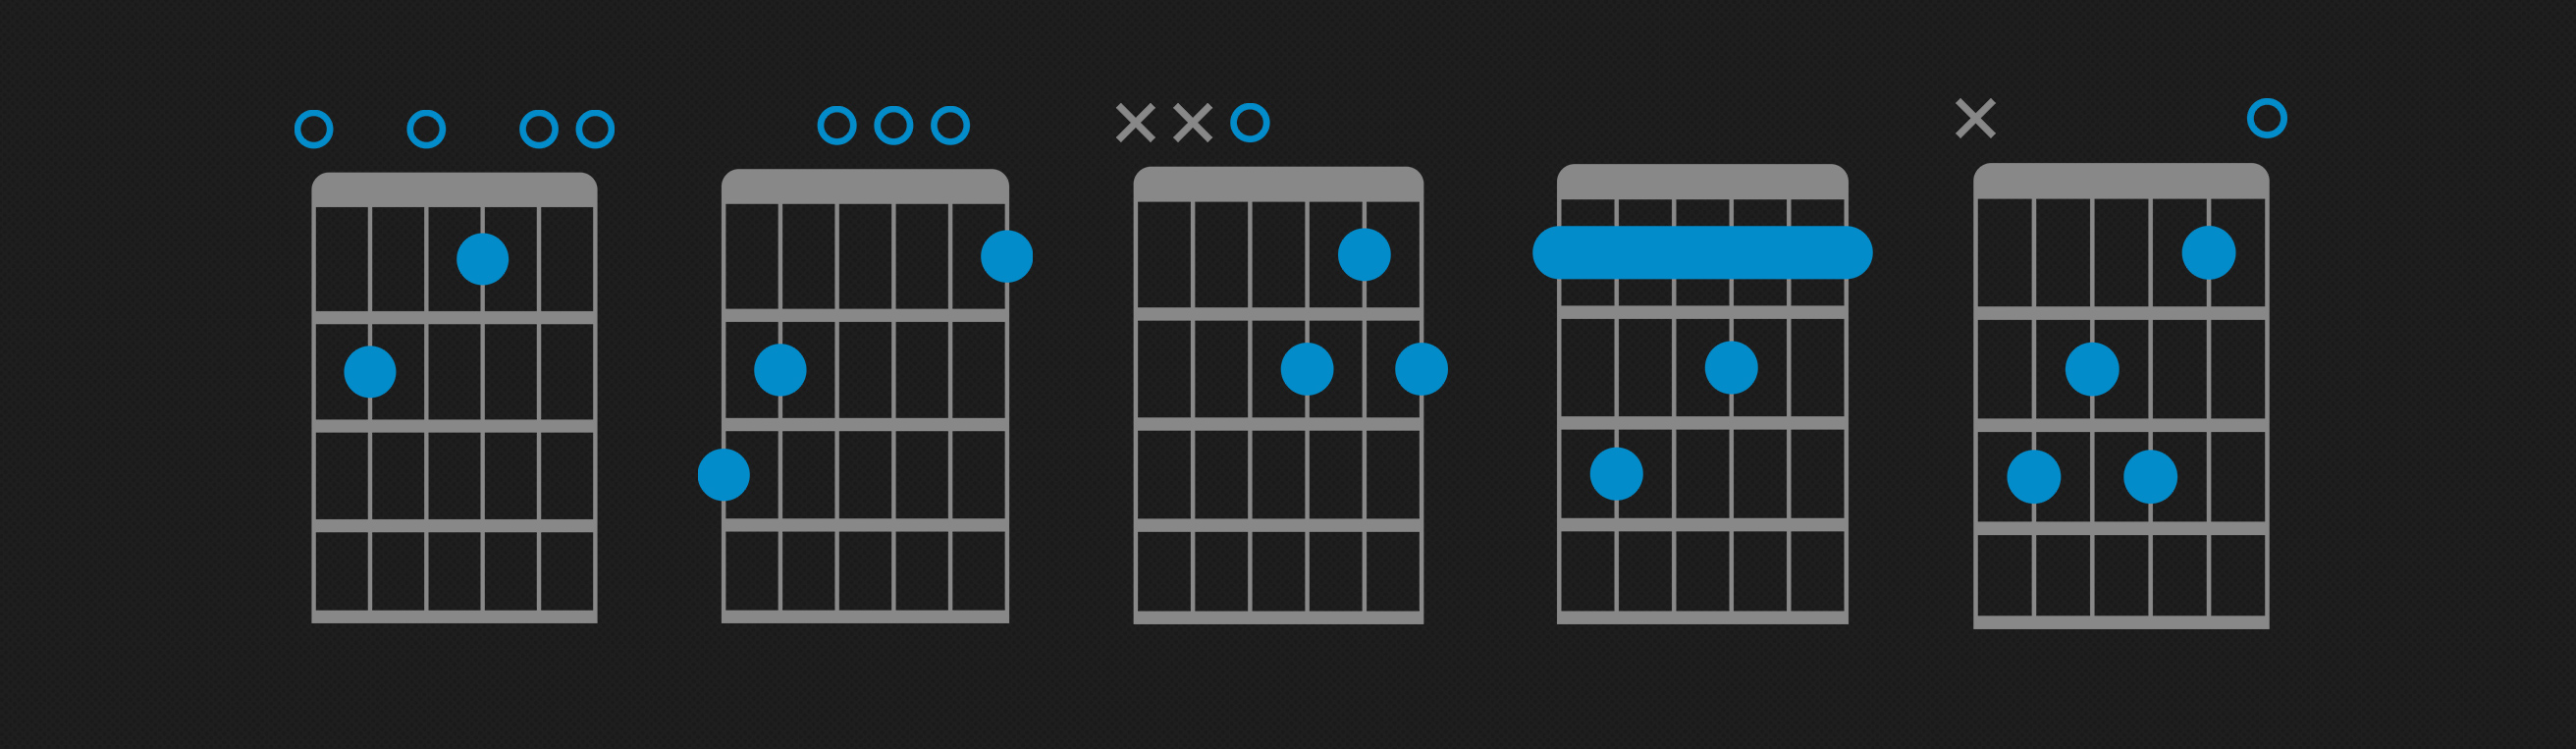 How to Play an A7 Guitar Chord, A dominant 7th Chord